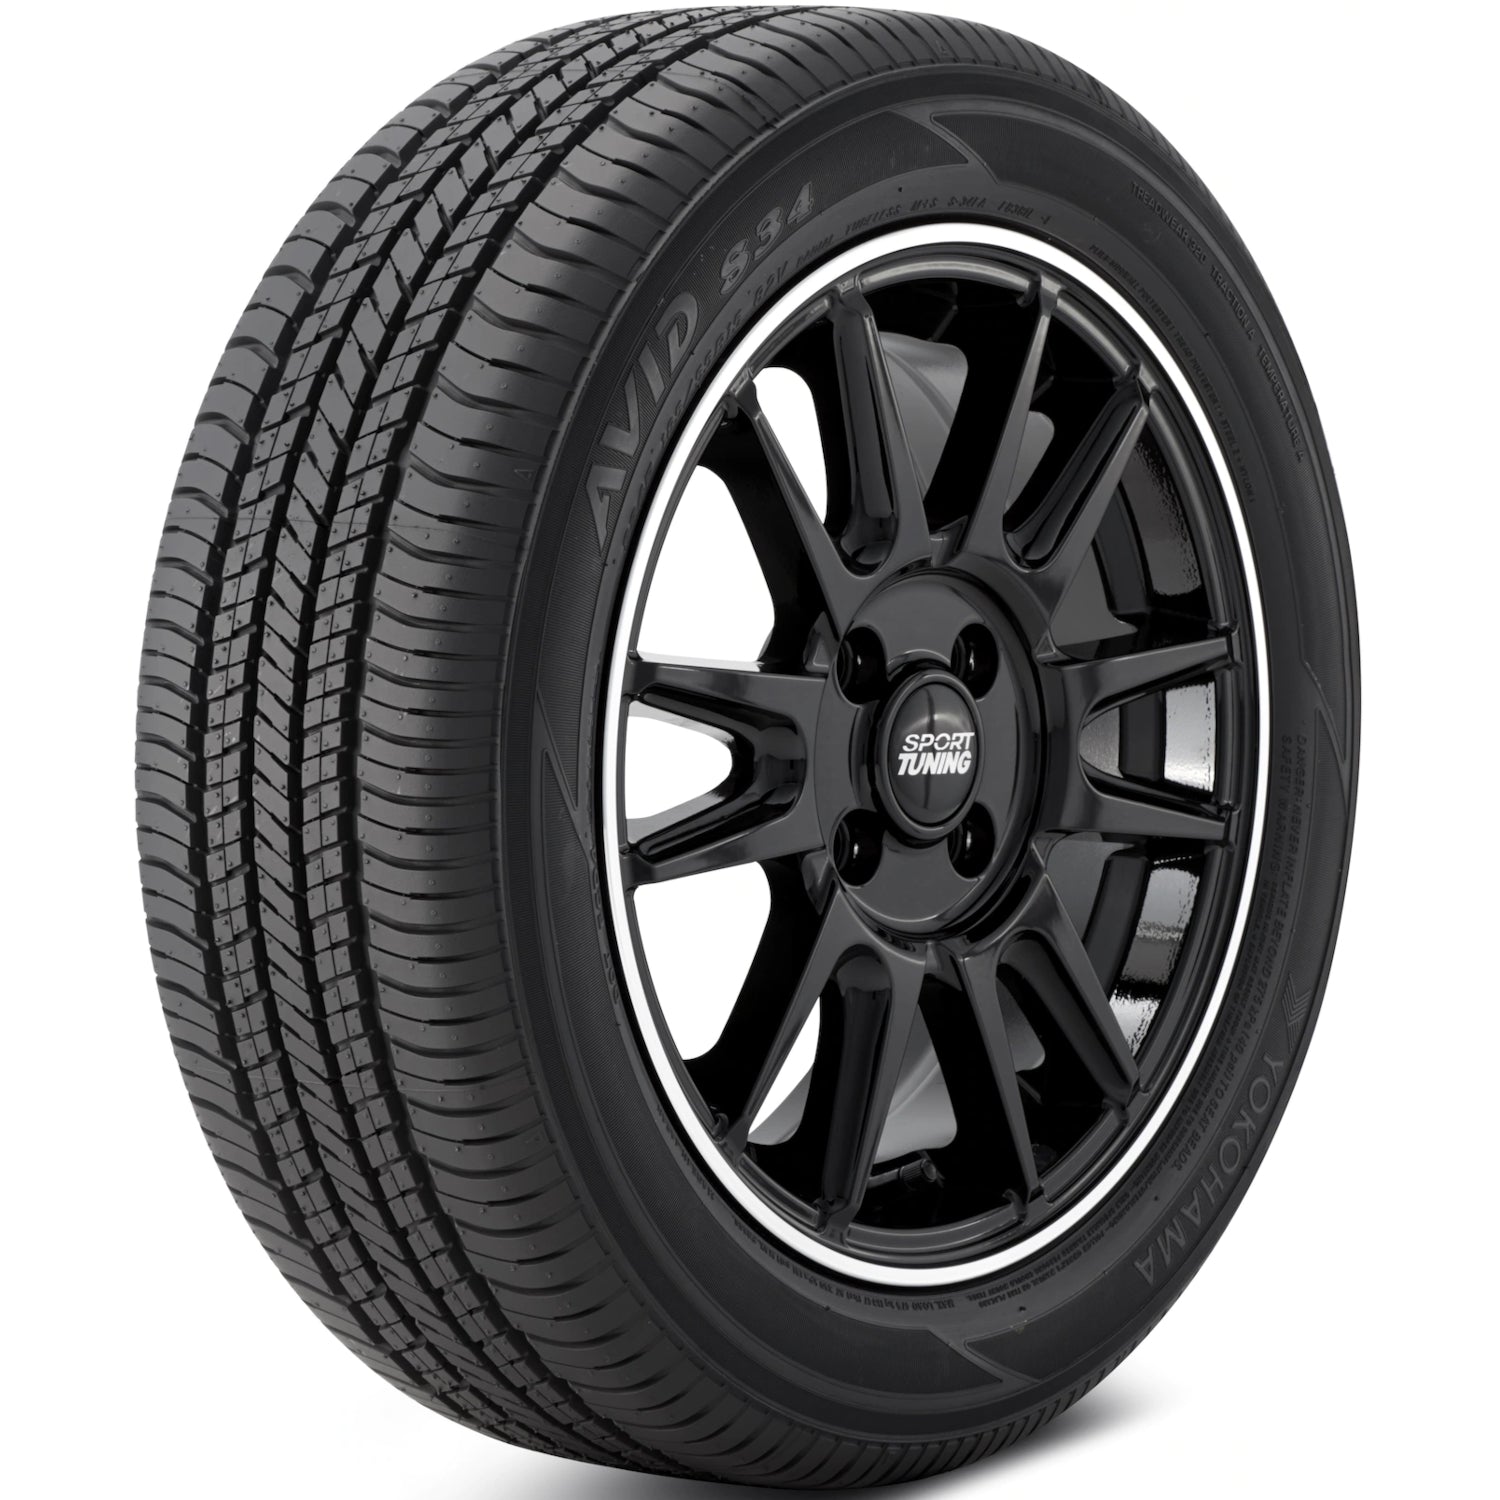 YOKOHAMA AVID S34F 205/60R16 (25.7X8.1R 16) Tires